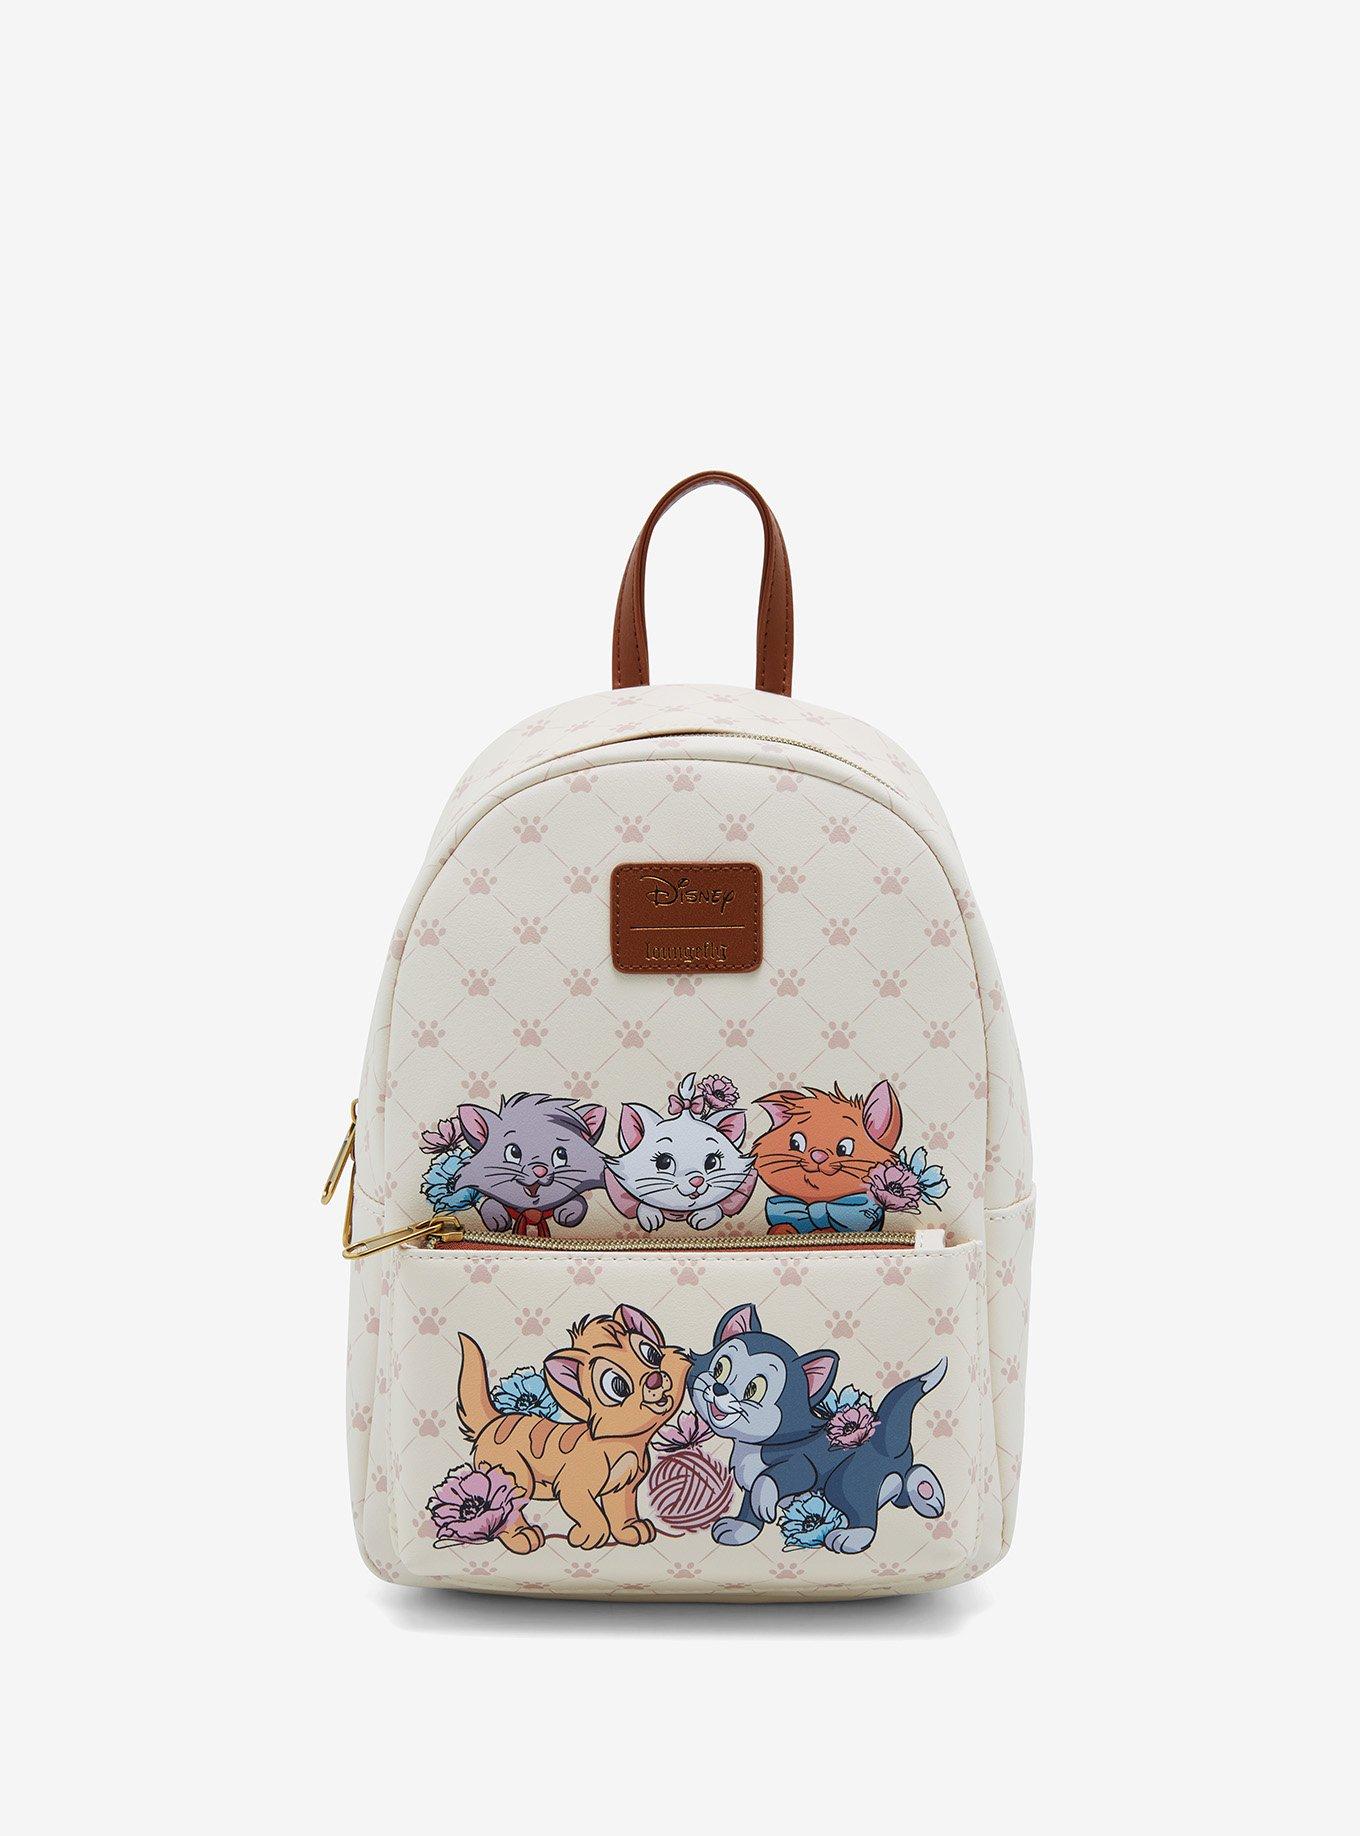 Luminous Cat Backpack - Super Kitty Cats